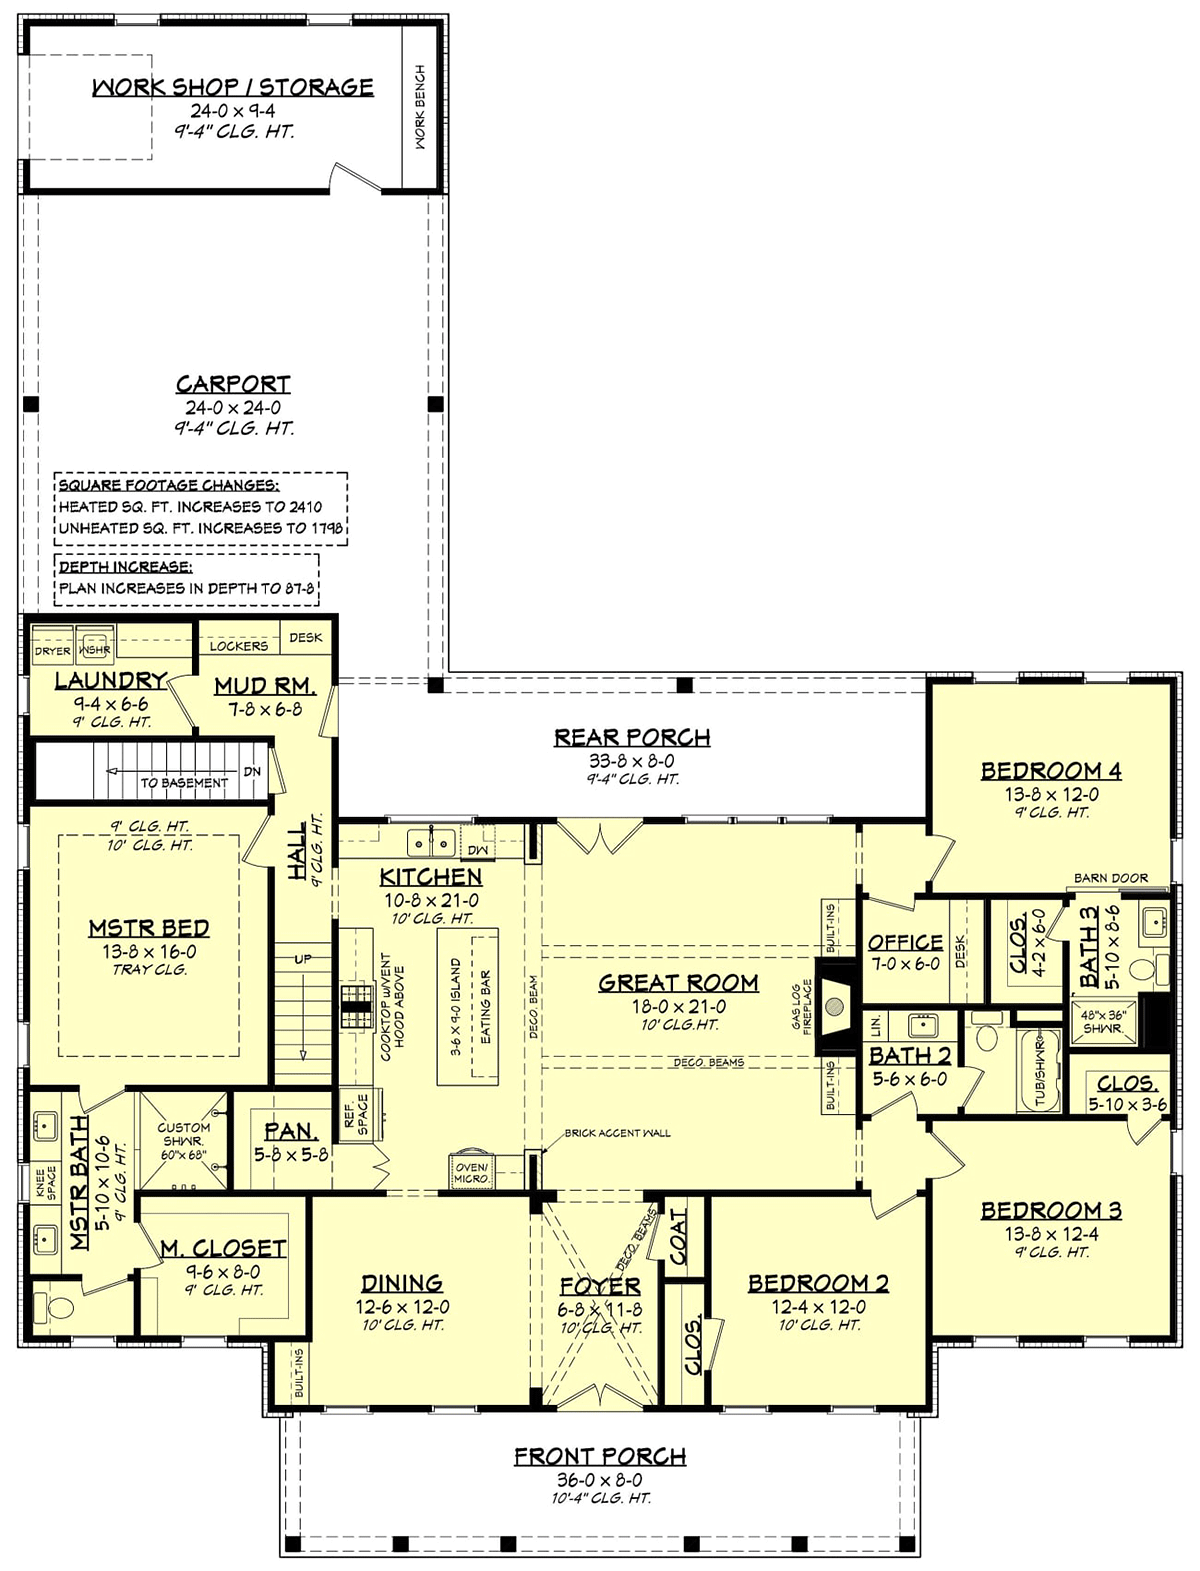 House Plan 56710 Alternate Level One